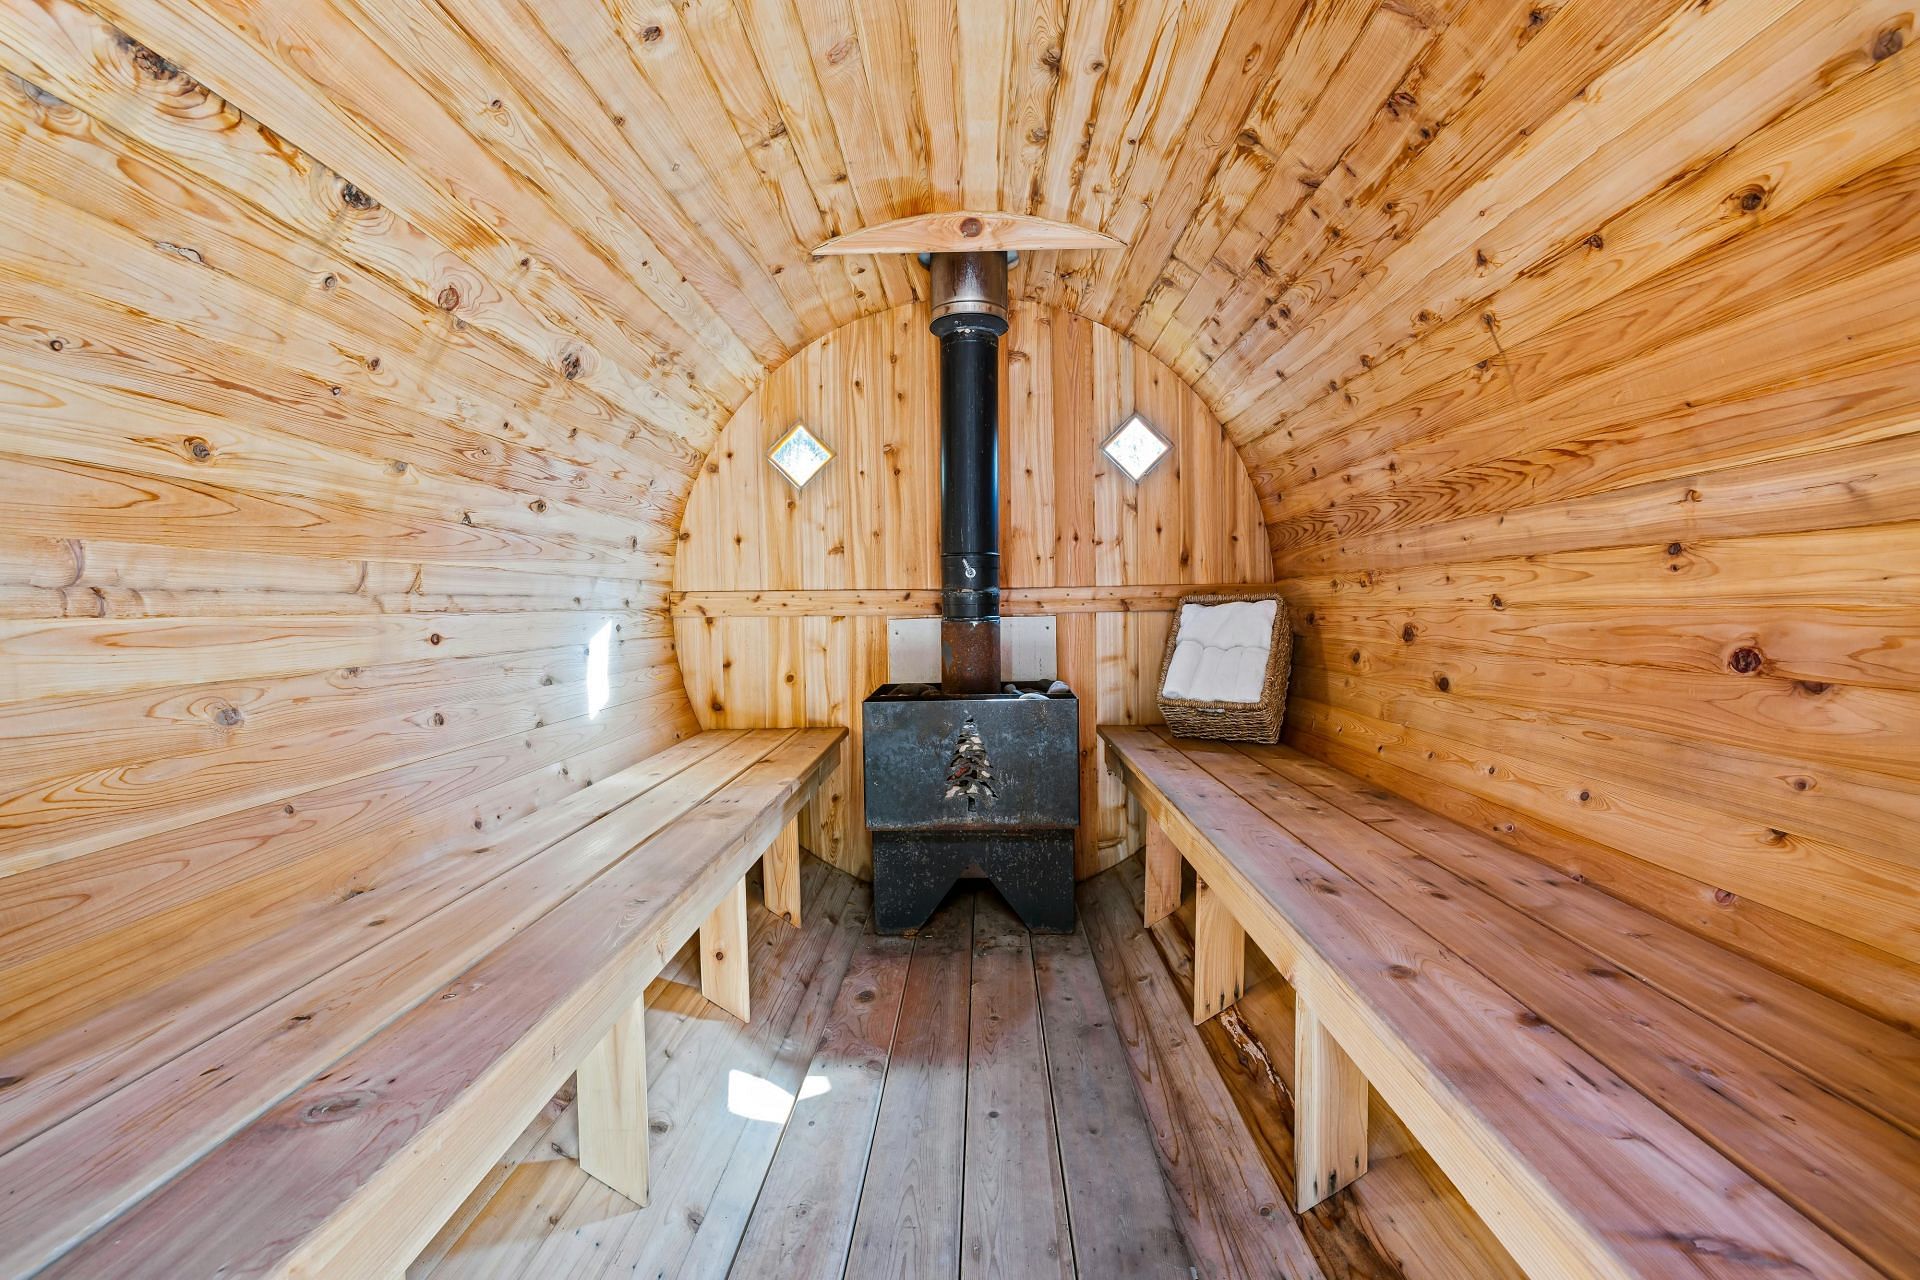 Sauna vs steam room (image sourced via Pexels / Photo by curtis)